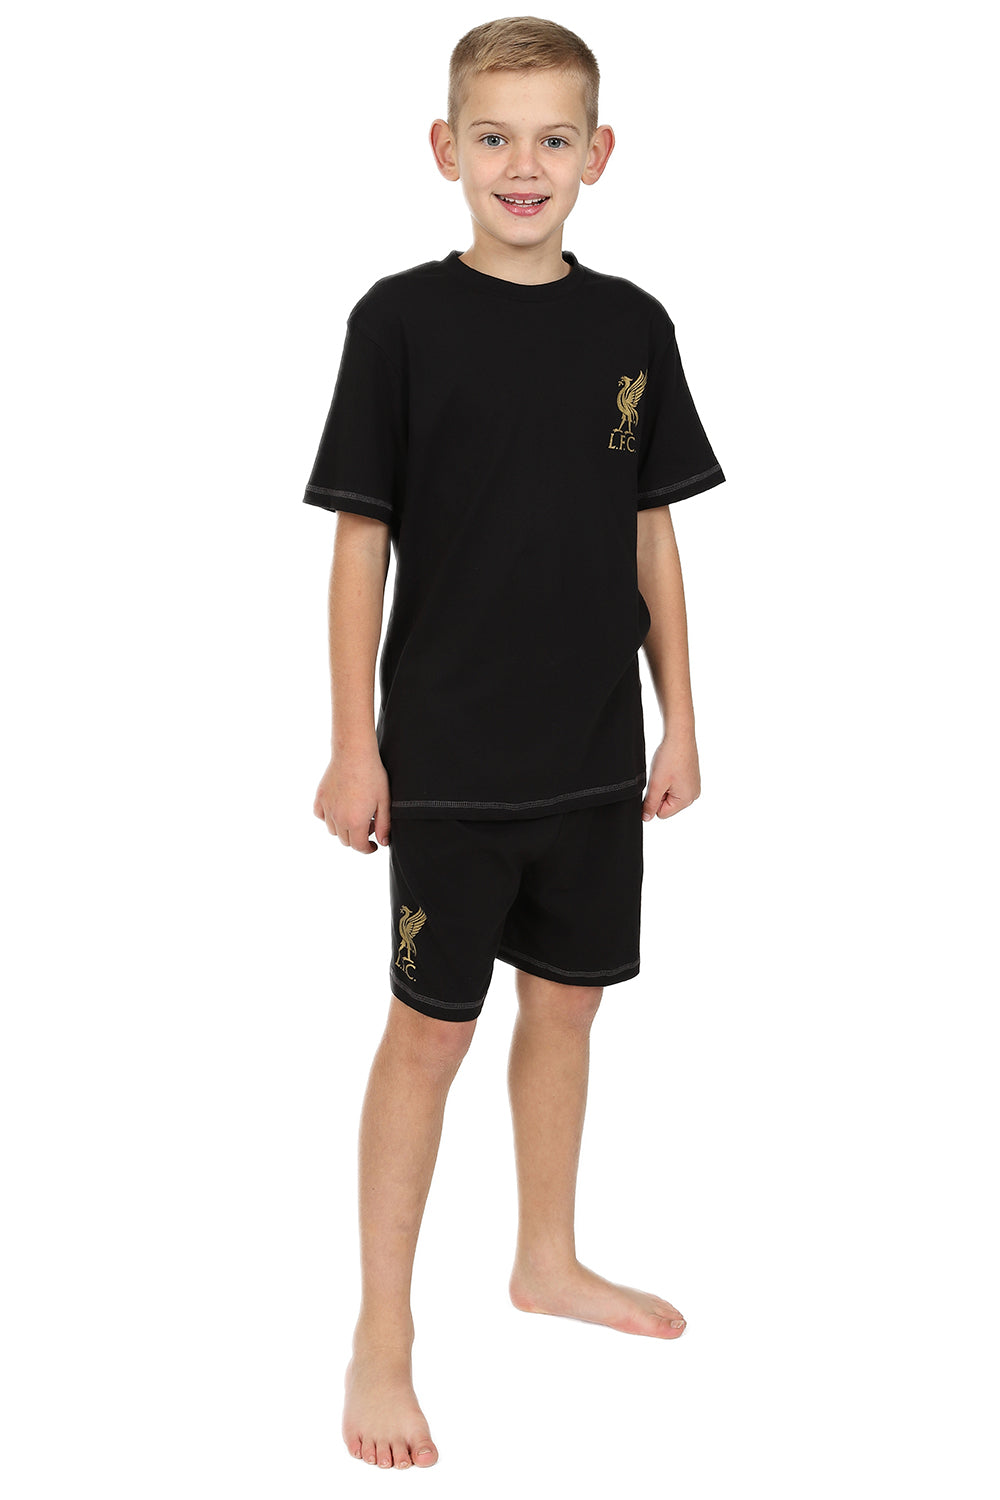 Boys Liverpool F.C Black Gold LFC Short Pyjamas